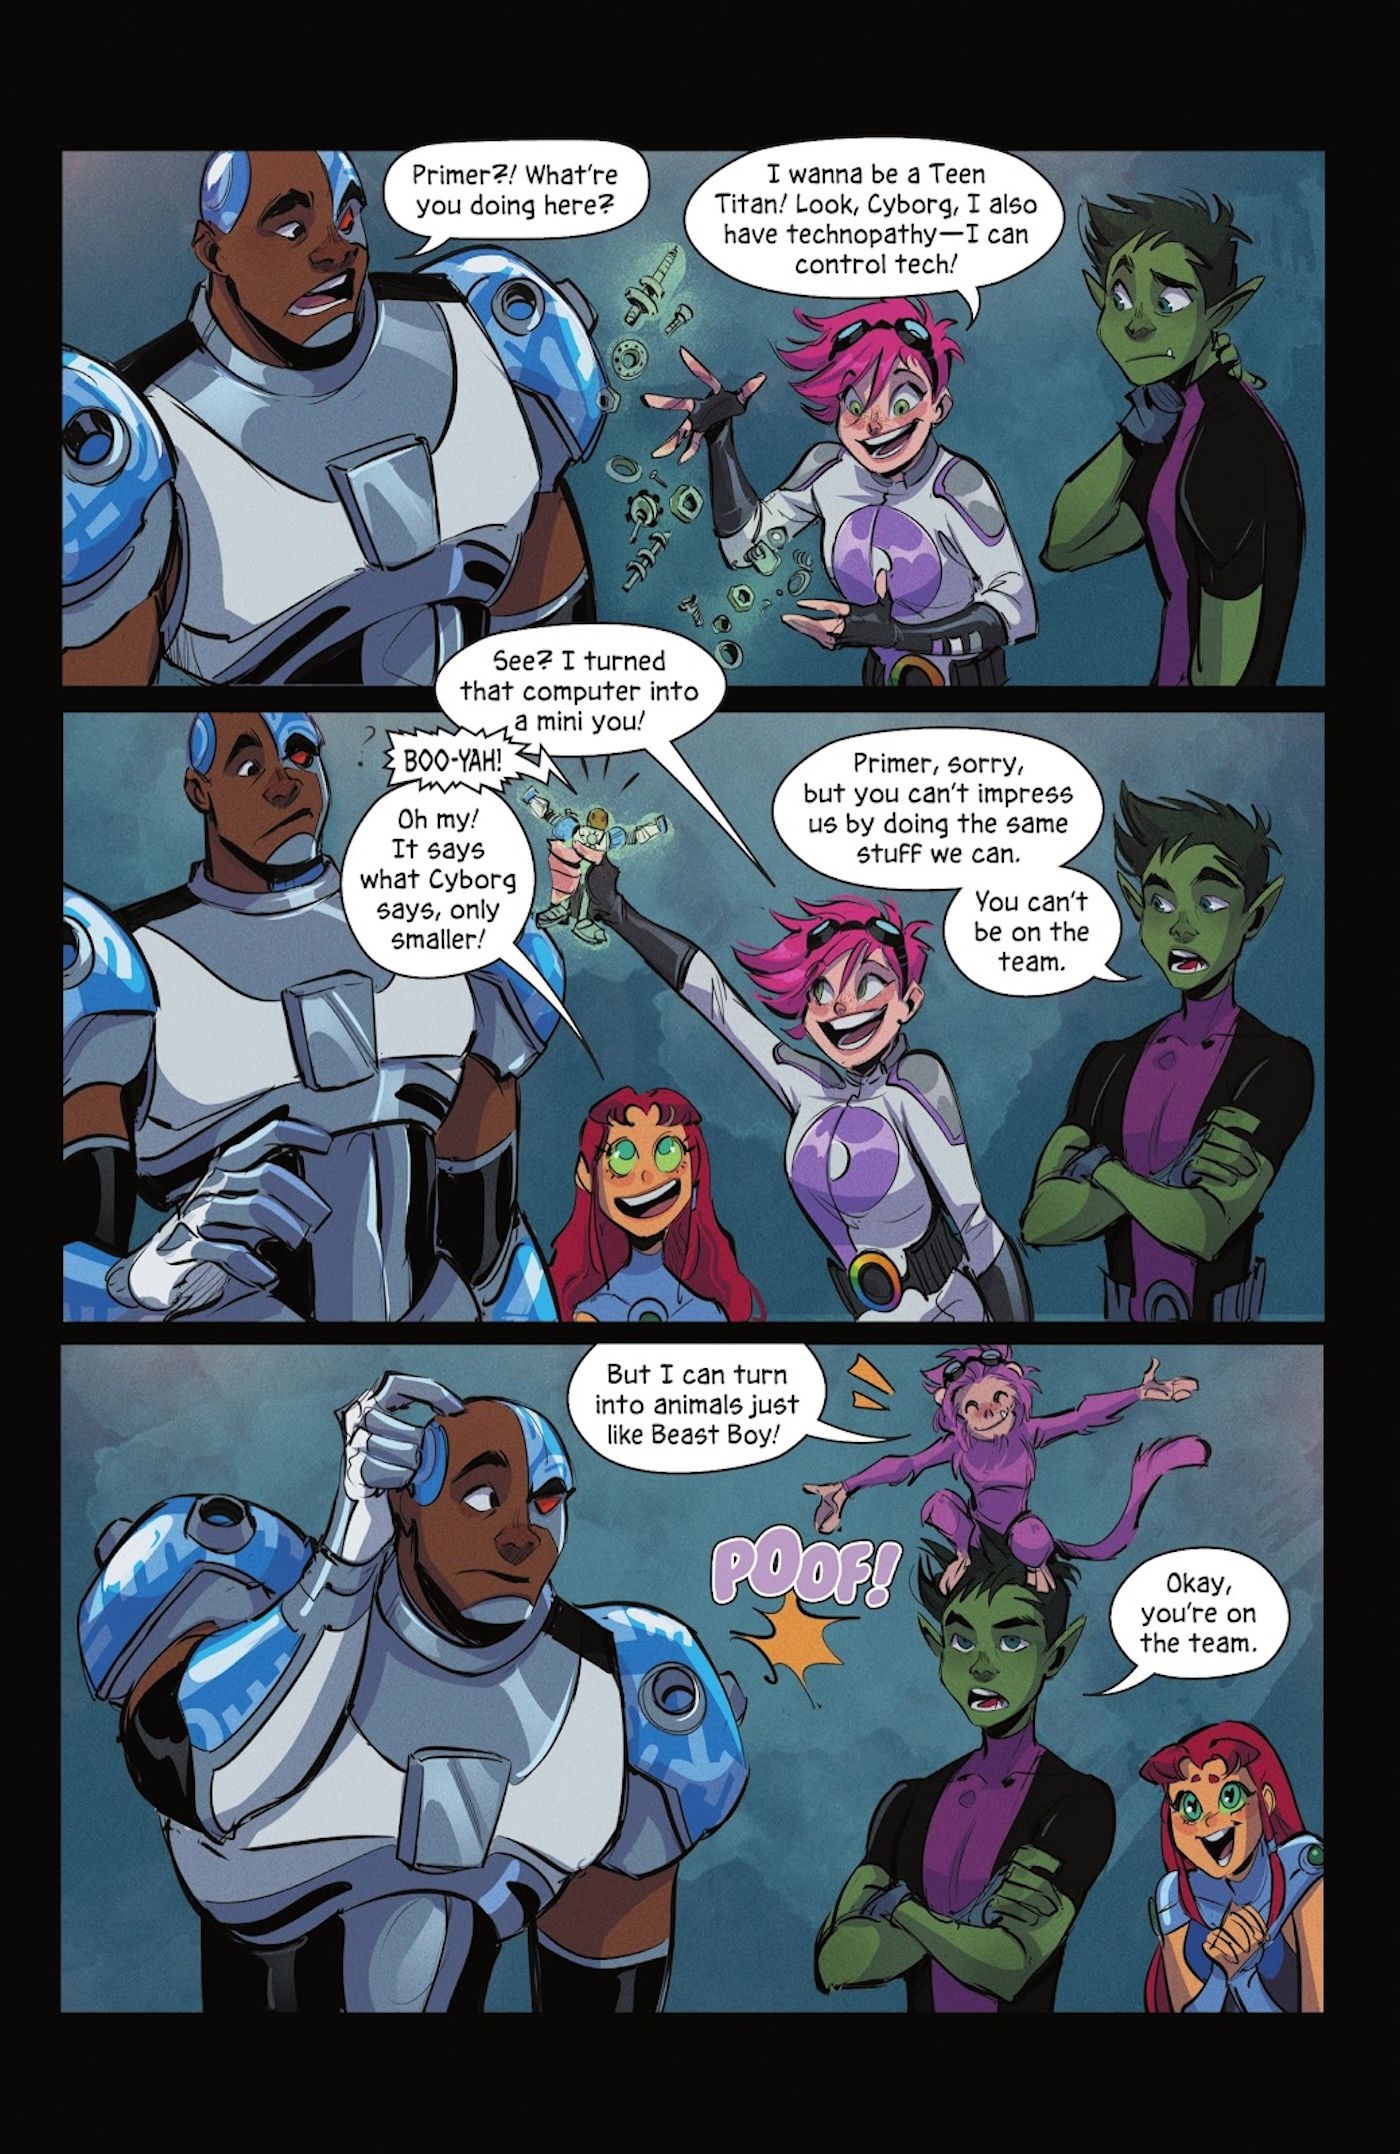 Comic Panels: Primer presents the Teen Titans Cyborg, Starfire and Beast Boy.